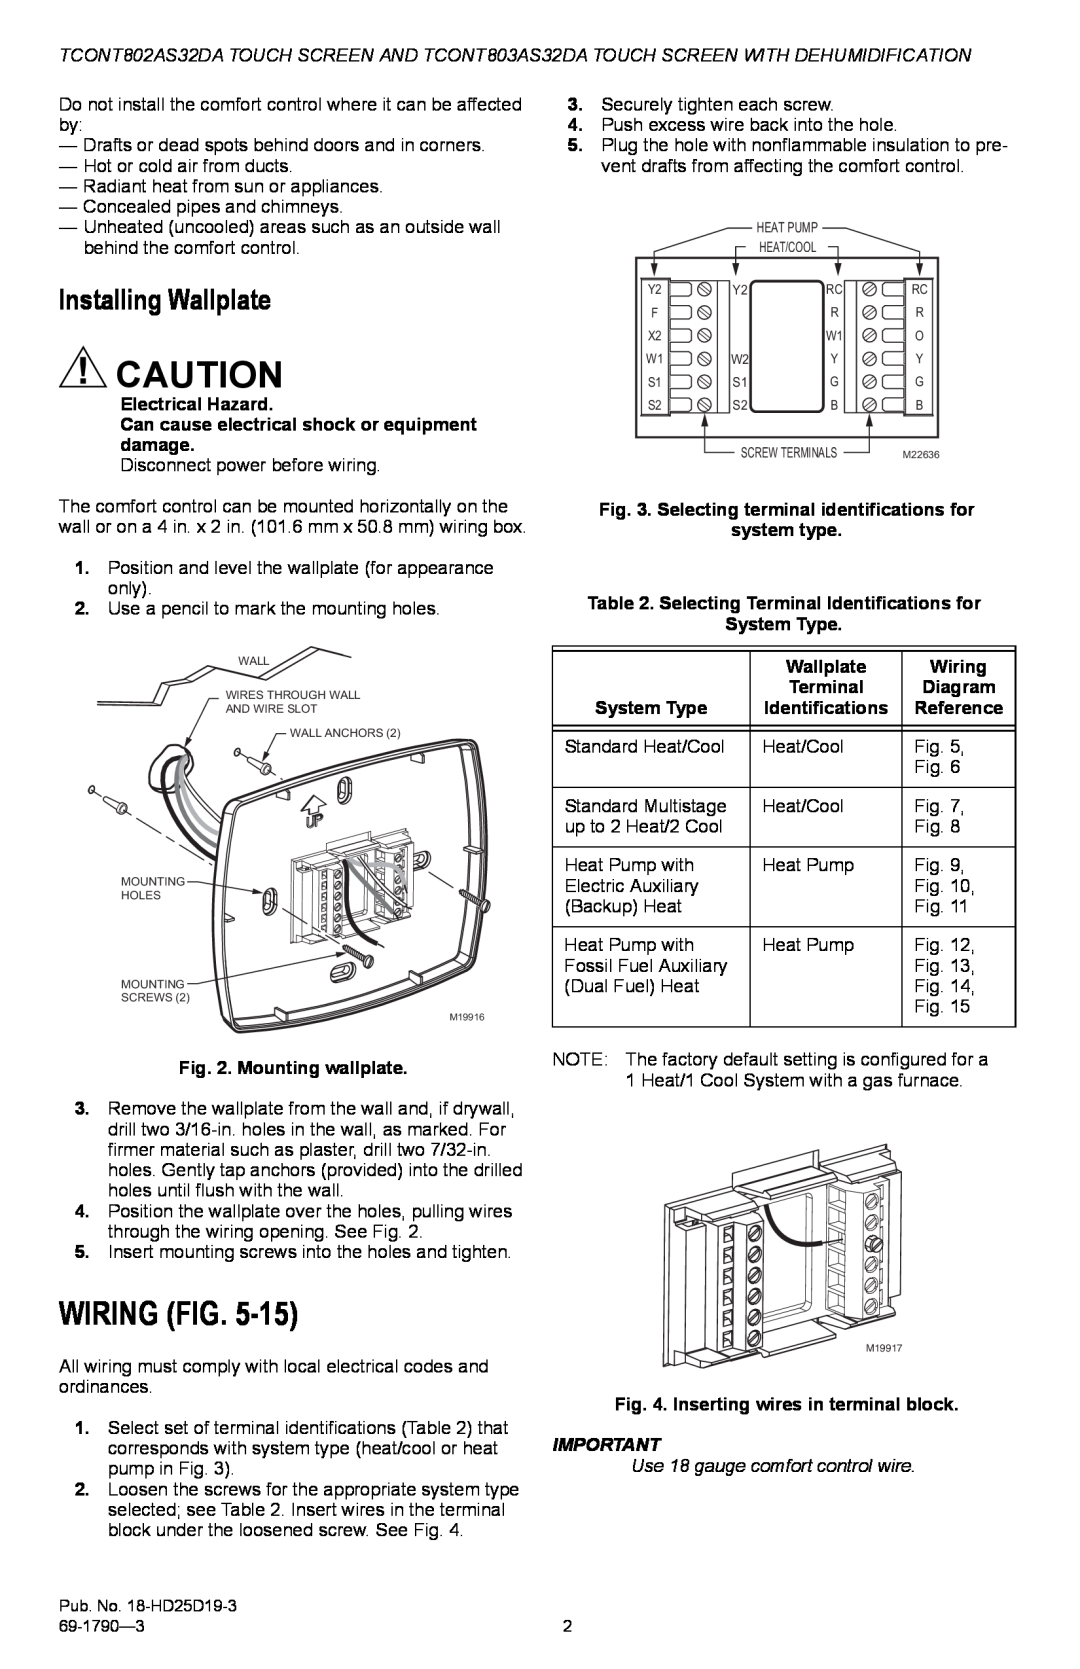 Trane TCONT803AS32DA, TCONT802AS32DA installation instructions Wiring Fig, Installing Wallplate 